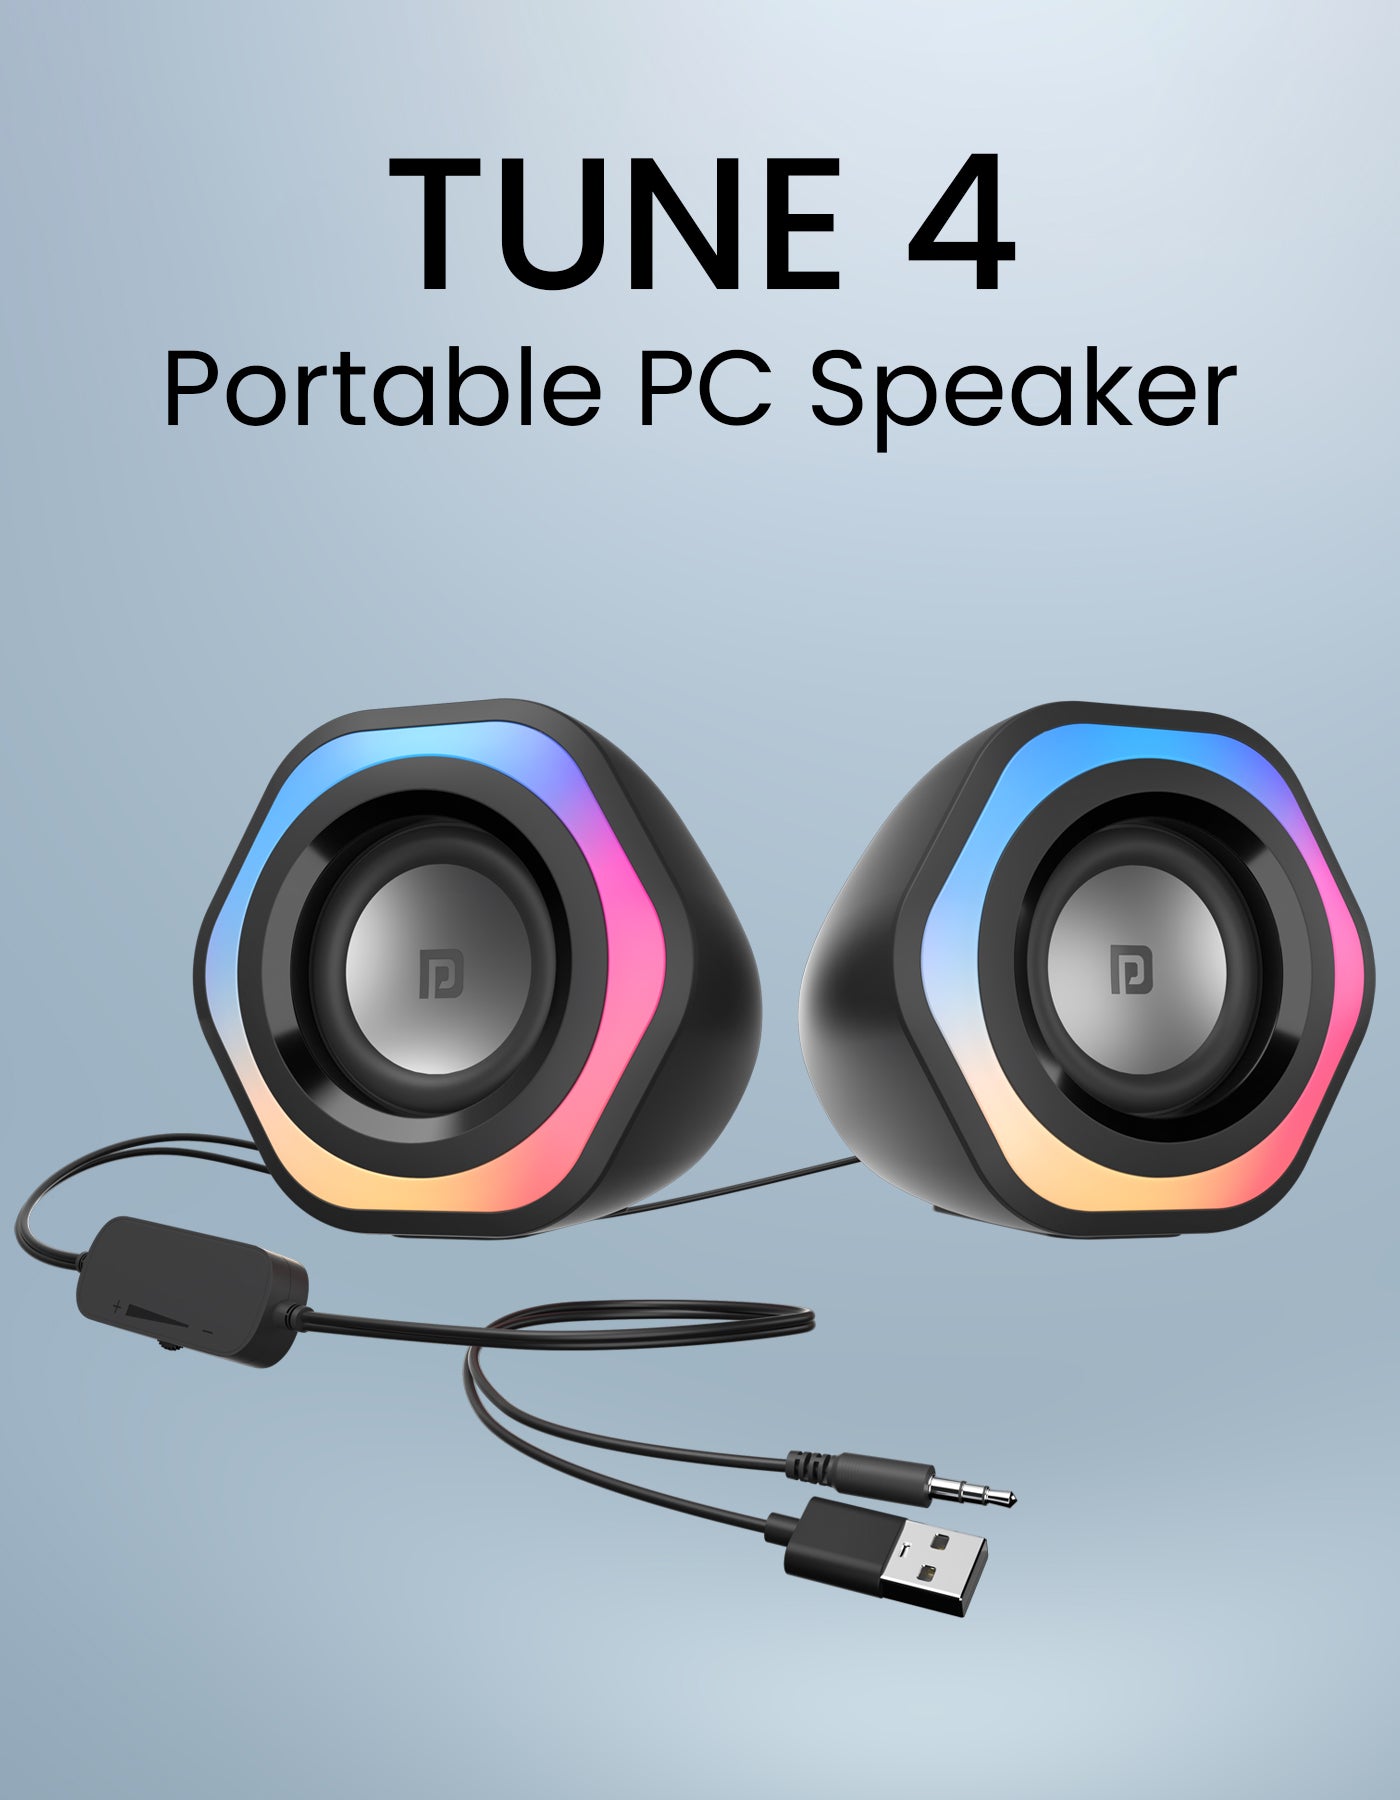 Portronics In Tune 4 Portable Soundbar speaker clear sound with alarm, USB port, 6W crystal clear sound quality